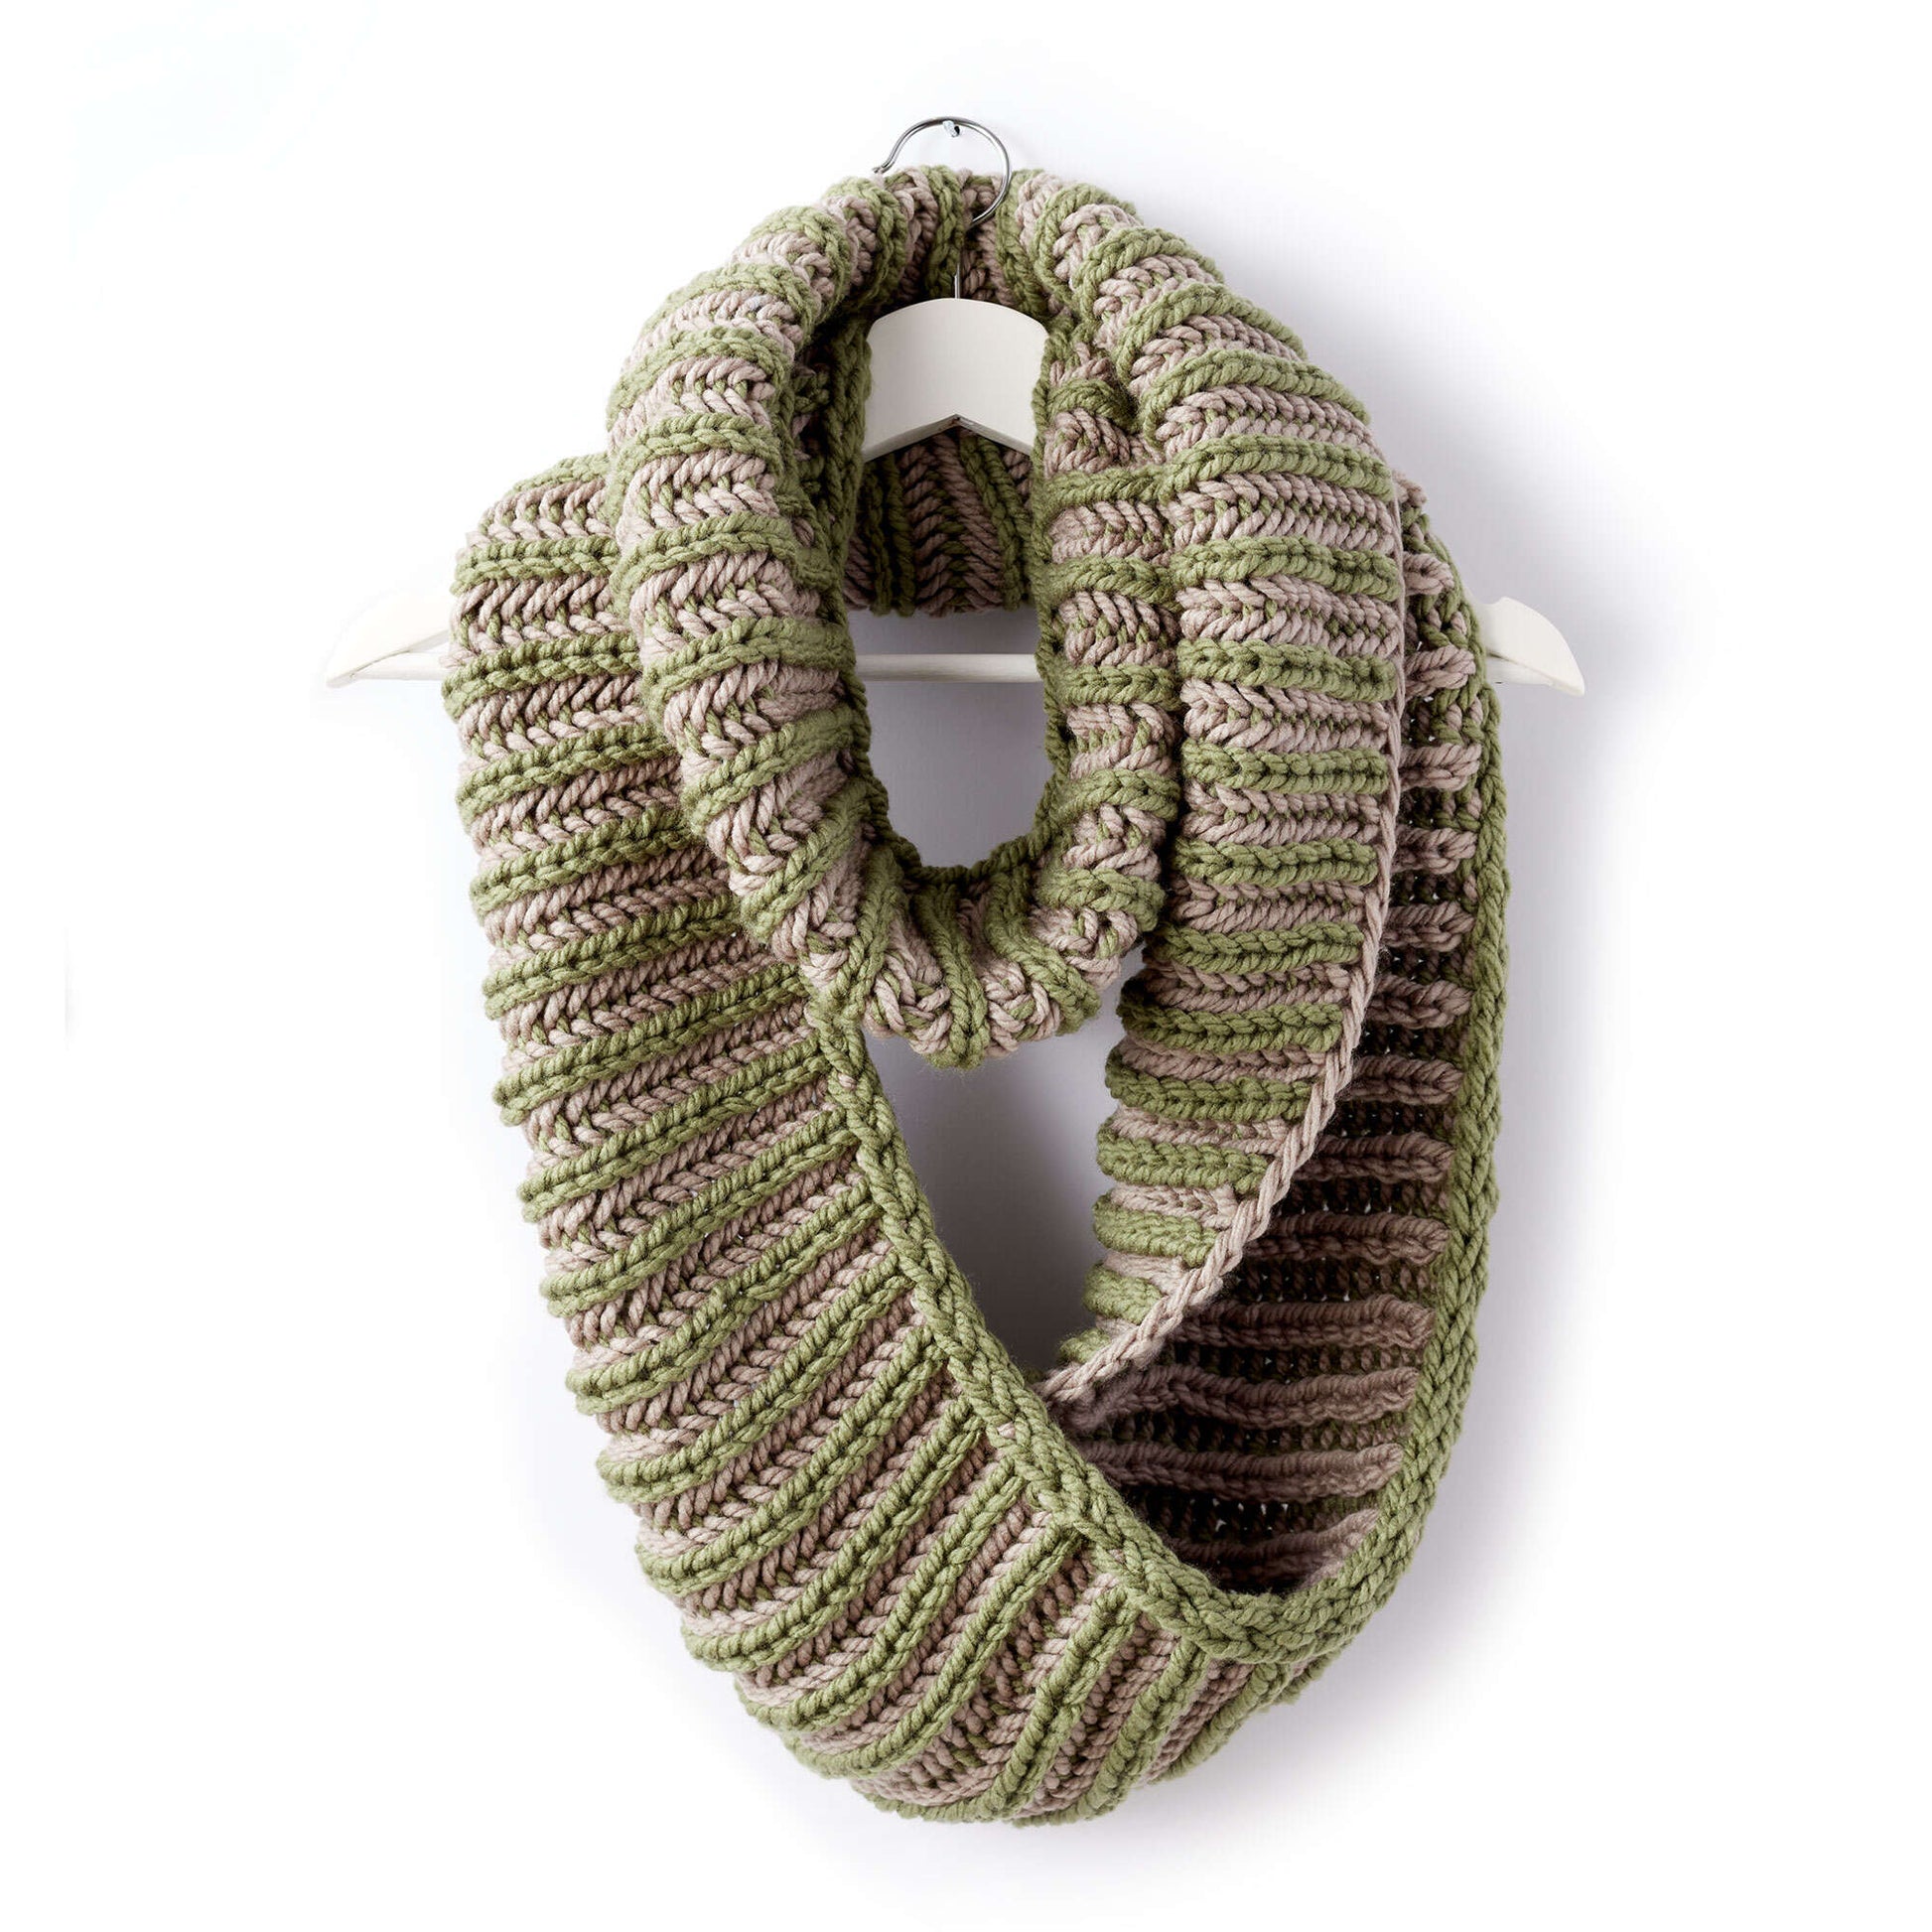 Bernat Brioche Accent Knit Cowl Knit Cowl made in Bernat Softee Chunky yarn